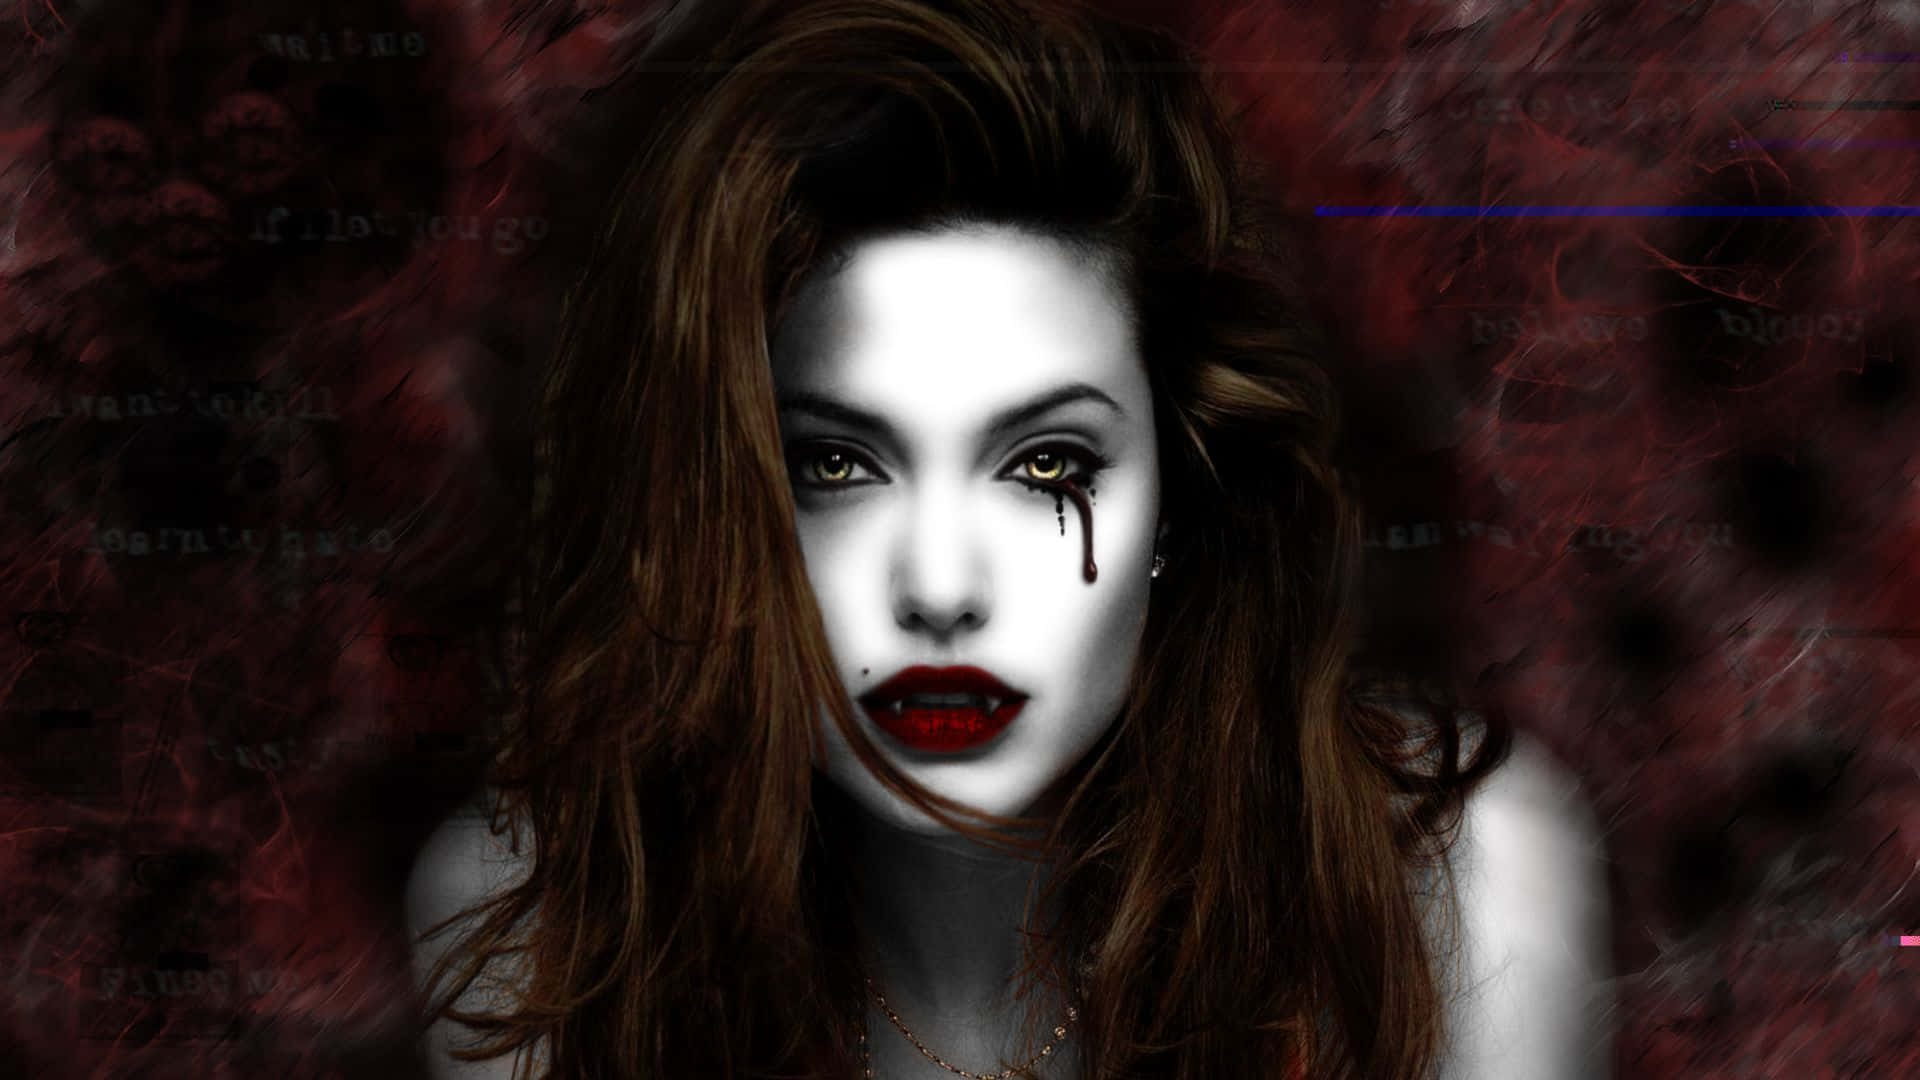 Vampire Lurking in the Shadows